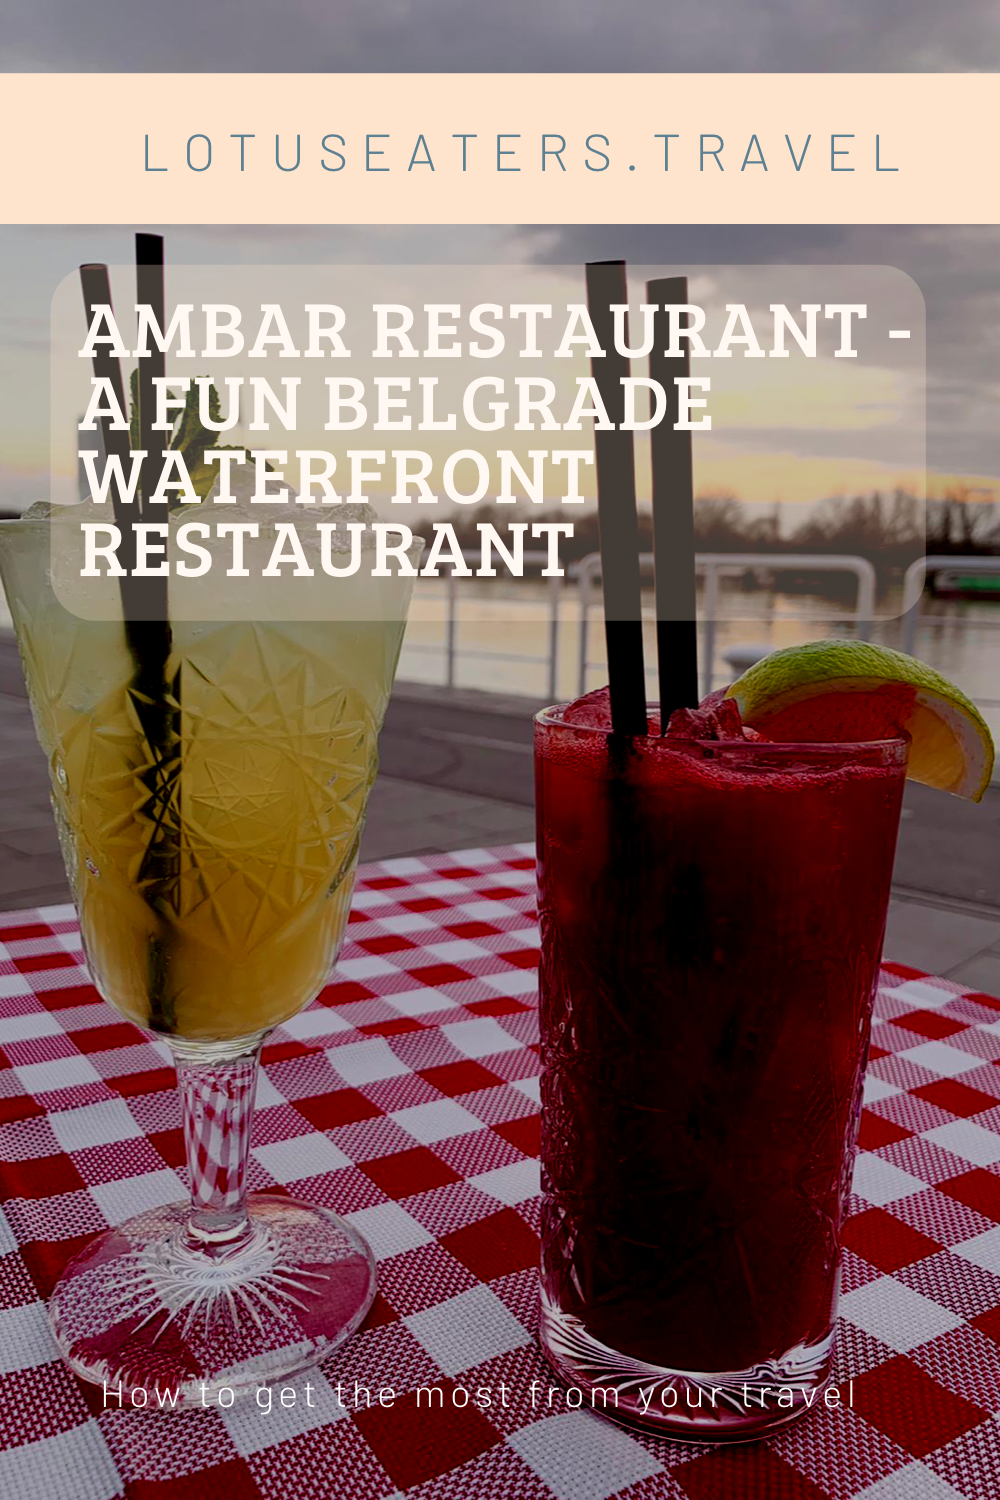 Ambar Restaurant – Fun Belgrade waterfront restaurant